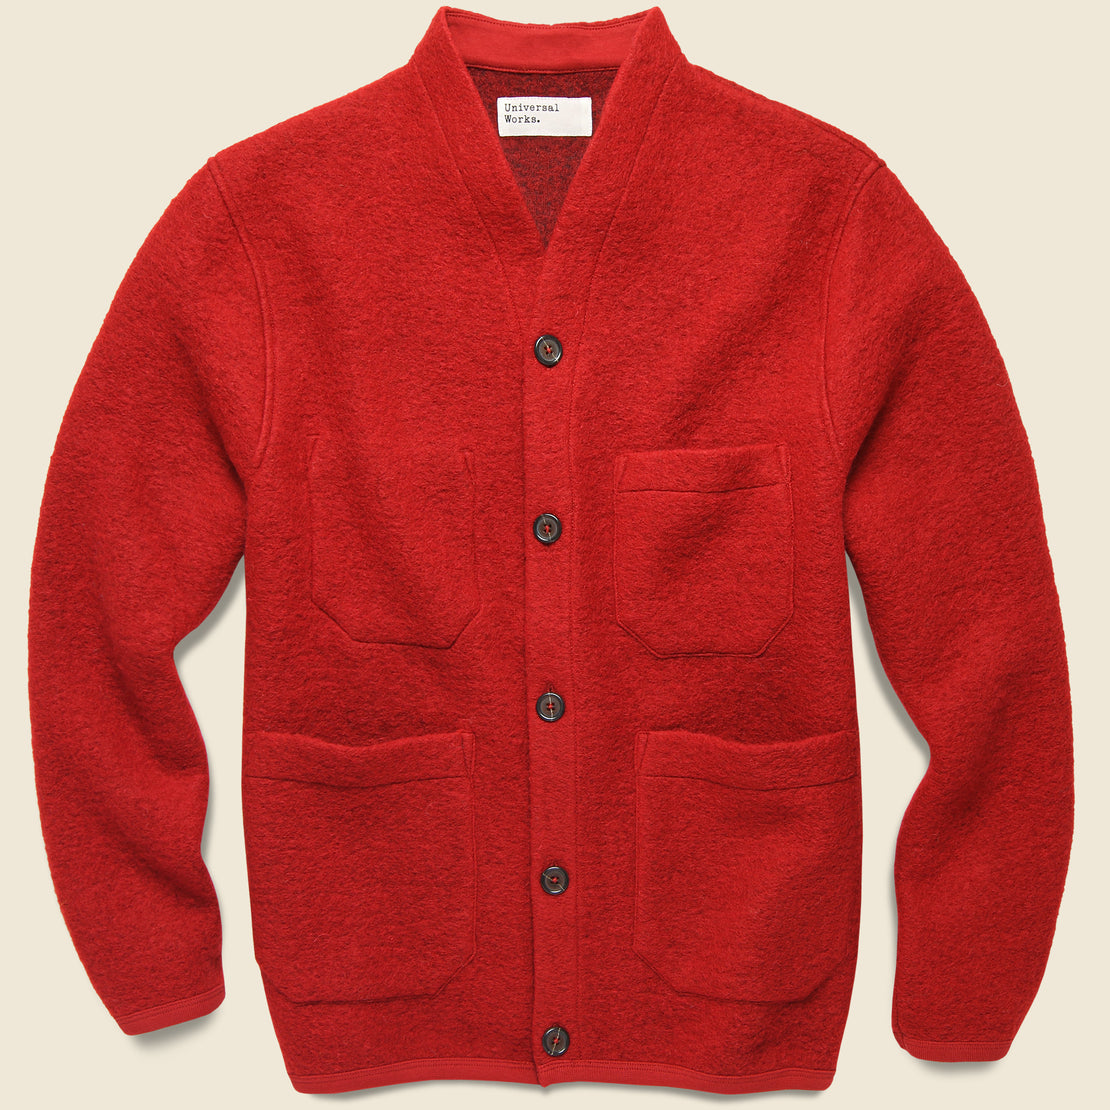 Universal Works Wool Fleece Cardigan - Red